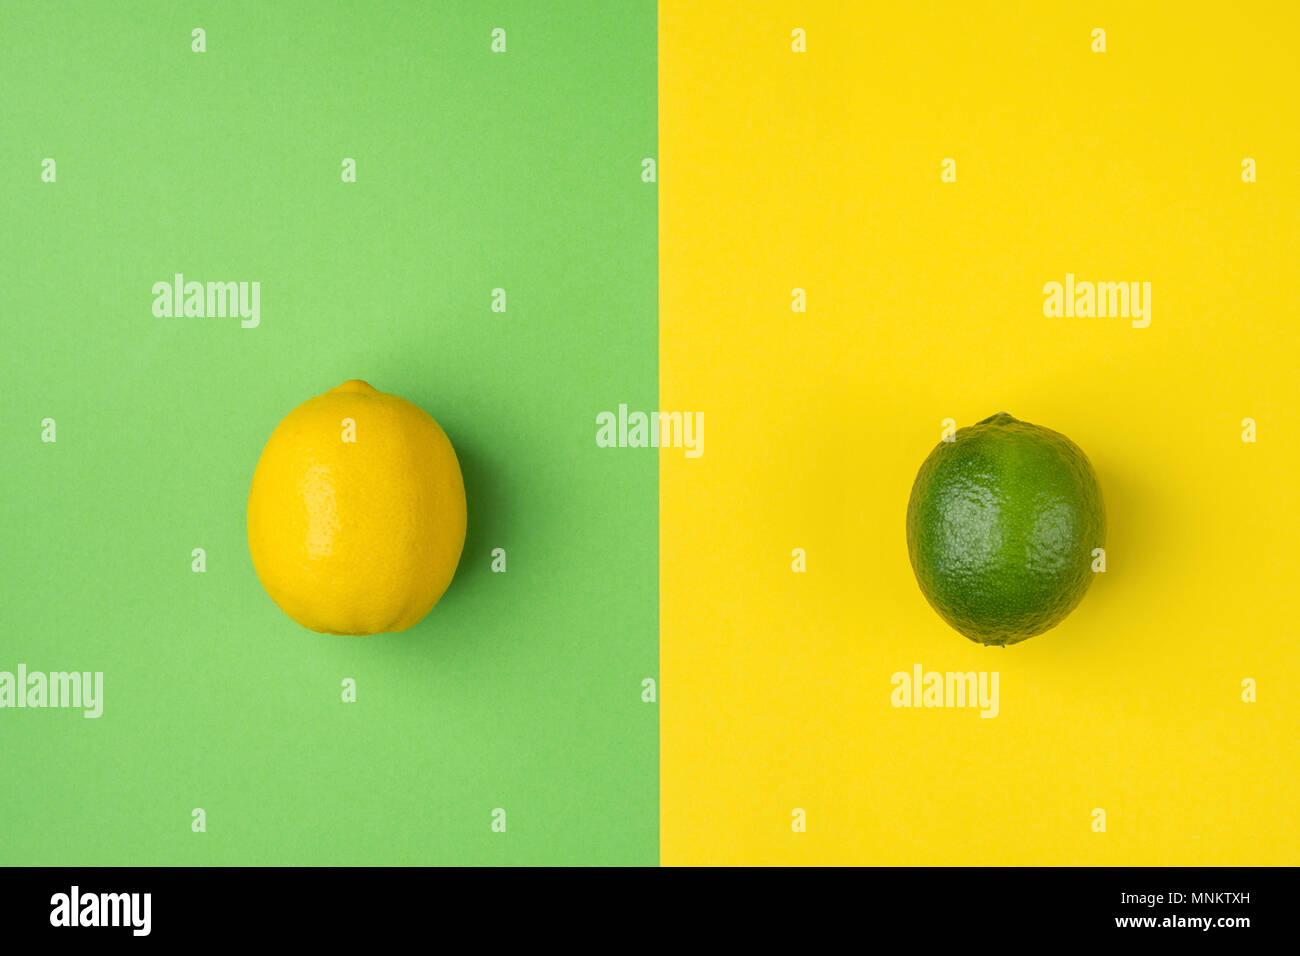 Ripe Organic Lemon and Lime on Split Duotone Green Yellow Background. Styled Creative Image. Citrus Fruits Vitamins Summer Vegan Fashion Concept. Food Stock Photo